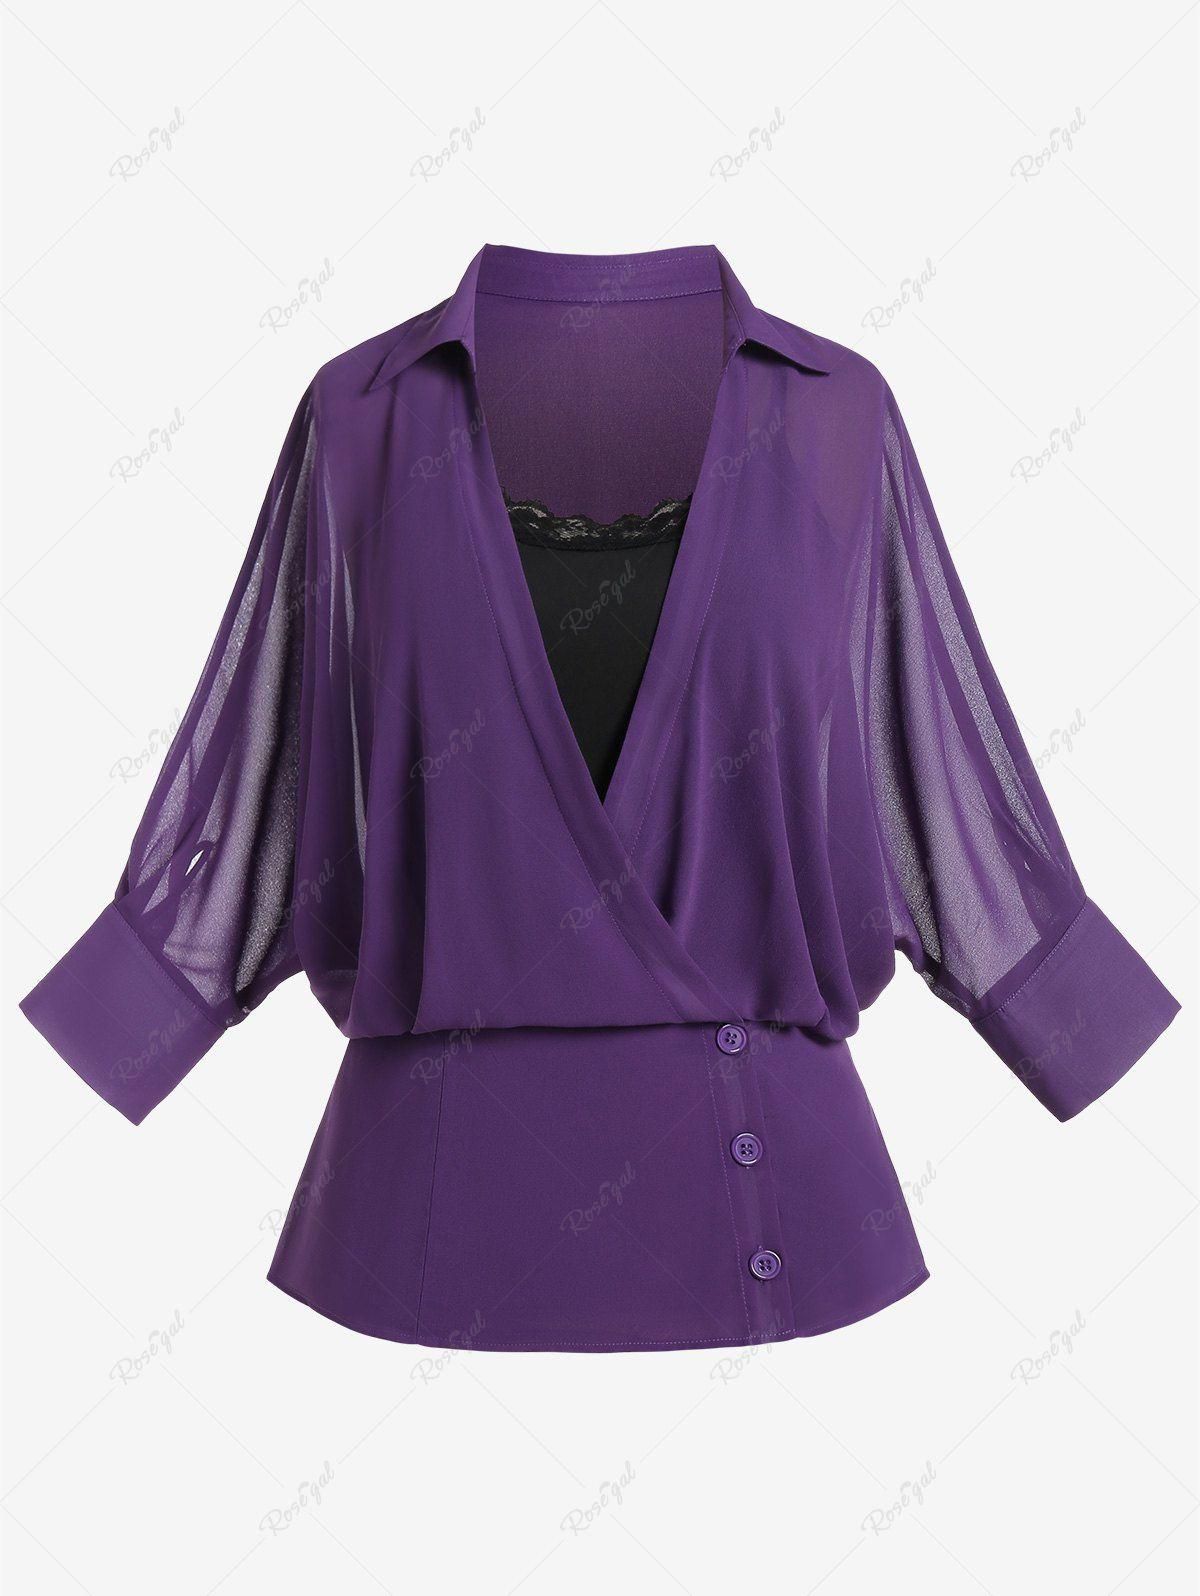 Plus Size Button Up Chiffon Shirt and Lace Trim Camisole - M | Us 10